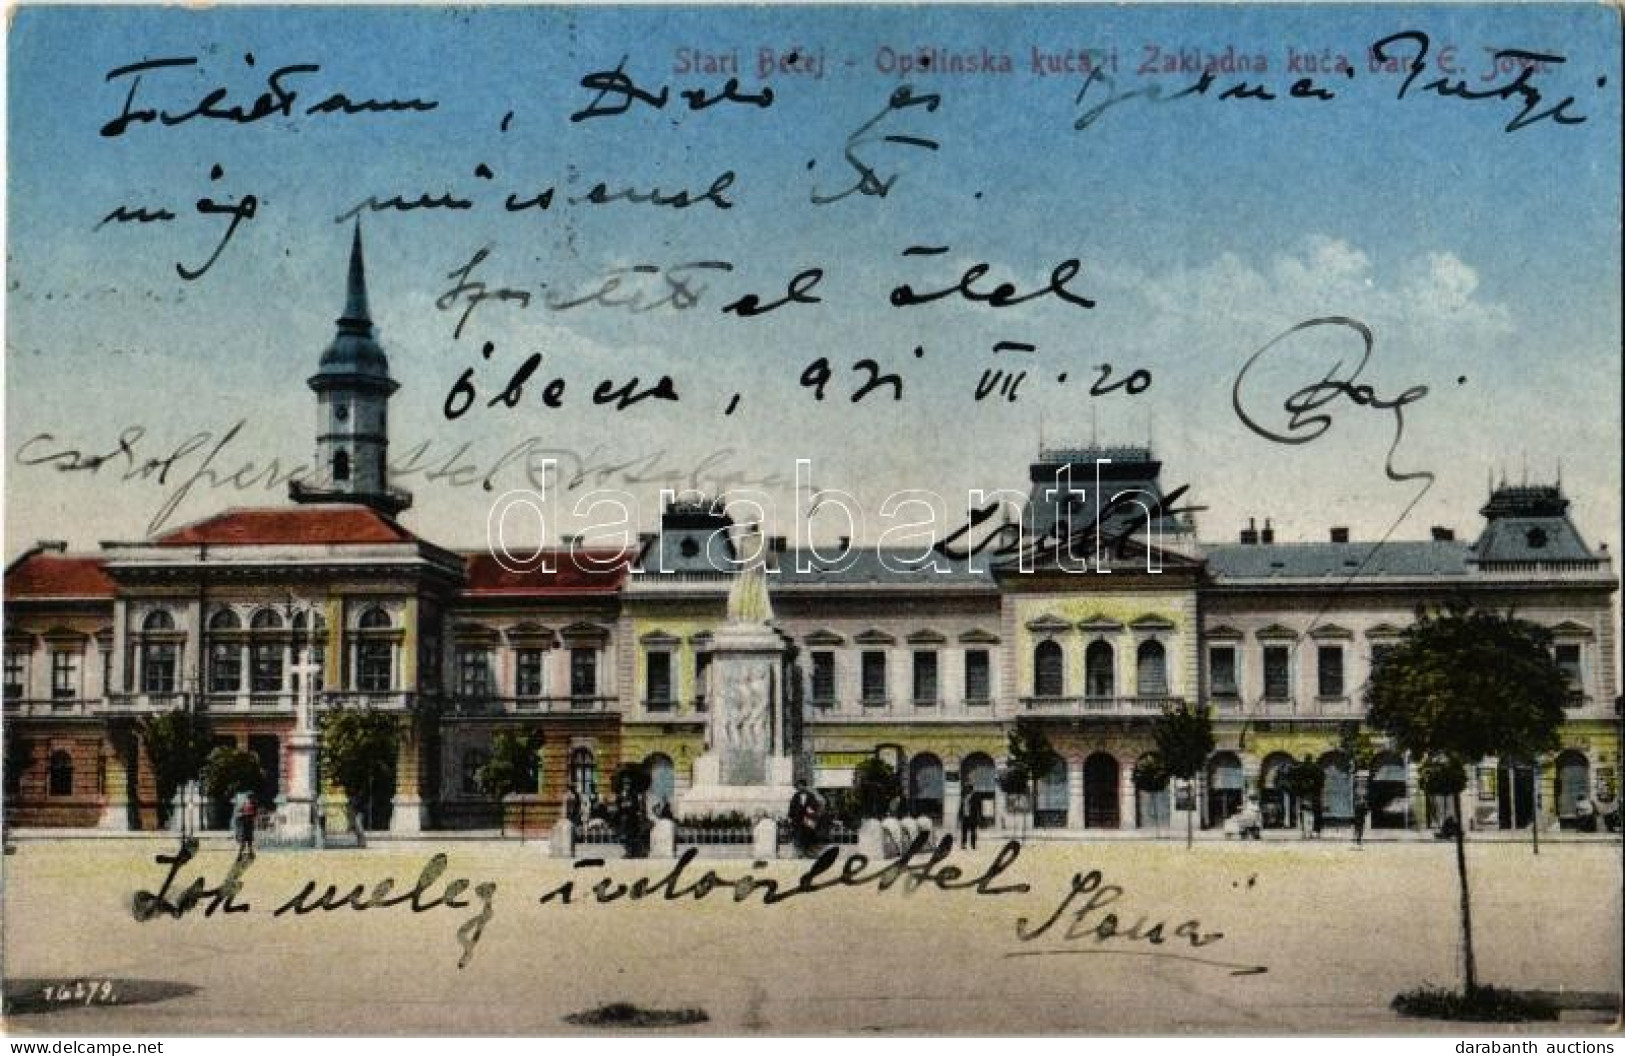 T2 1921 Óbecse, Stari Becej; Városháza / Opstínska Kuca I Zakladna Kuca, Bar E. Jovic / Town Hall, Shops - Ohne Zuordnung